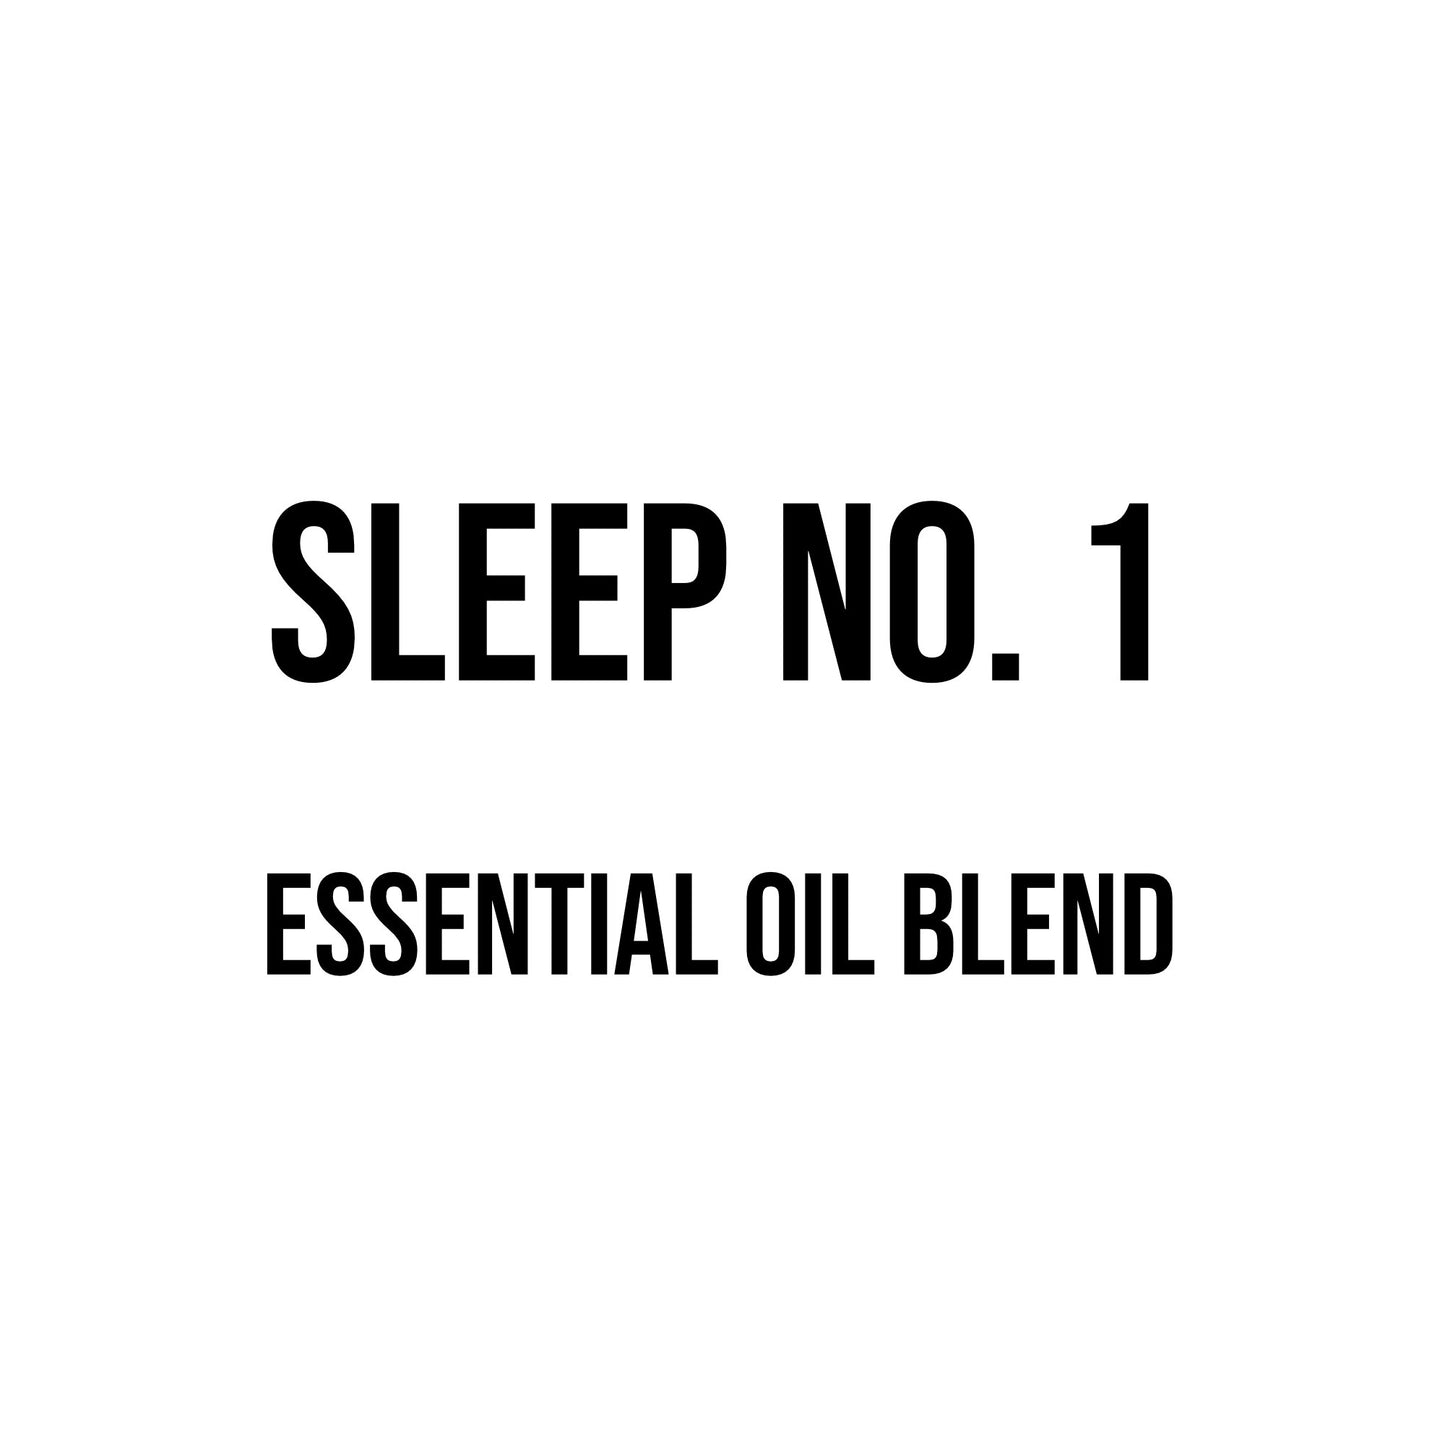 Sleep No. 1 Essential Oil Blend